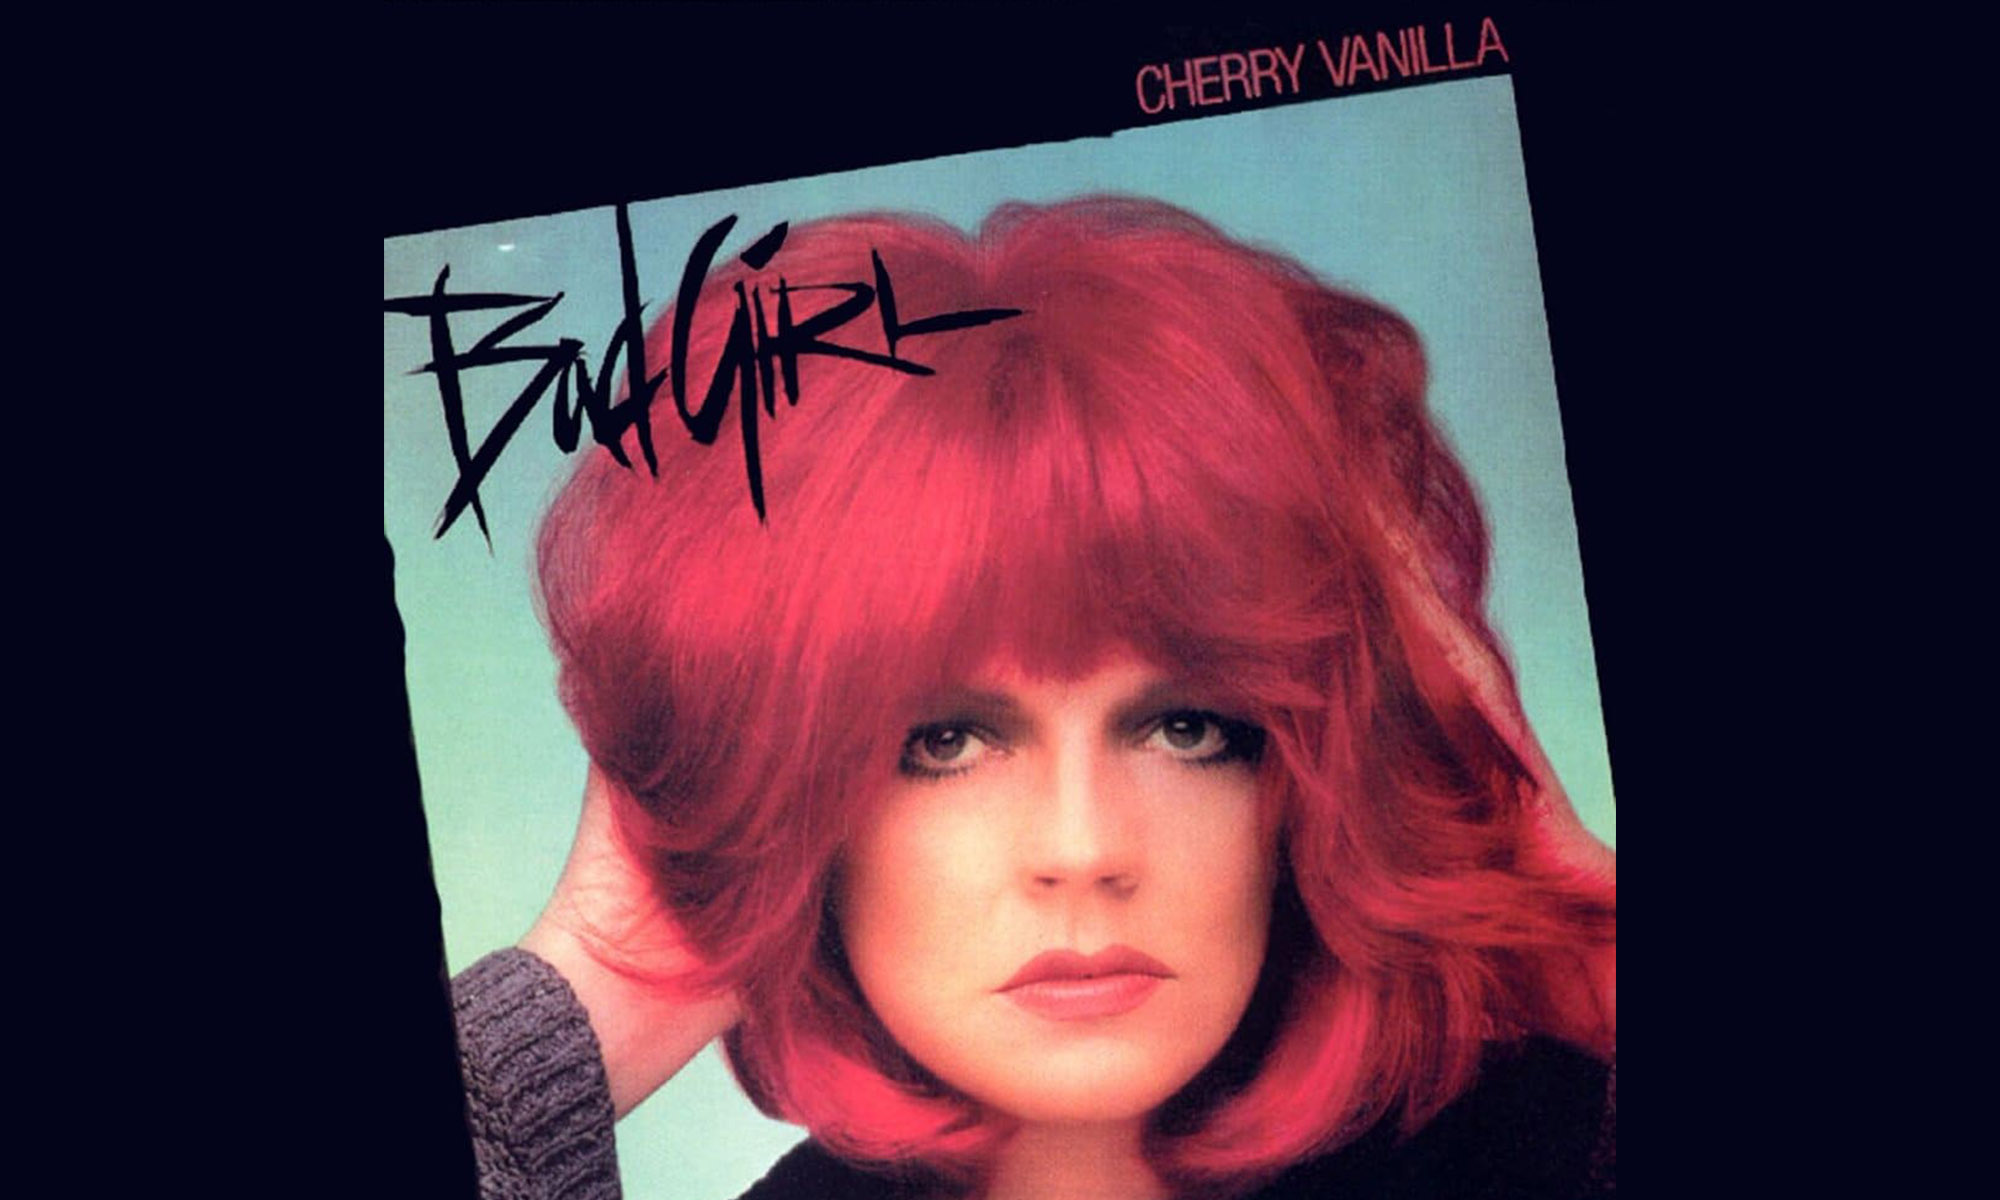 Cherry Vanilla's first album Bad Girl